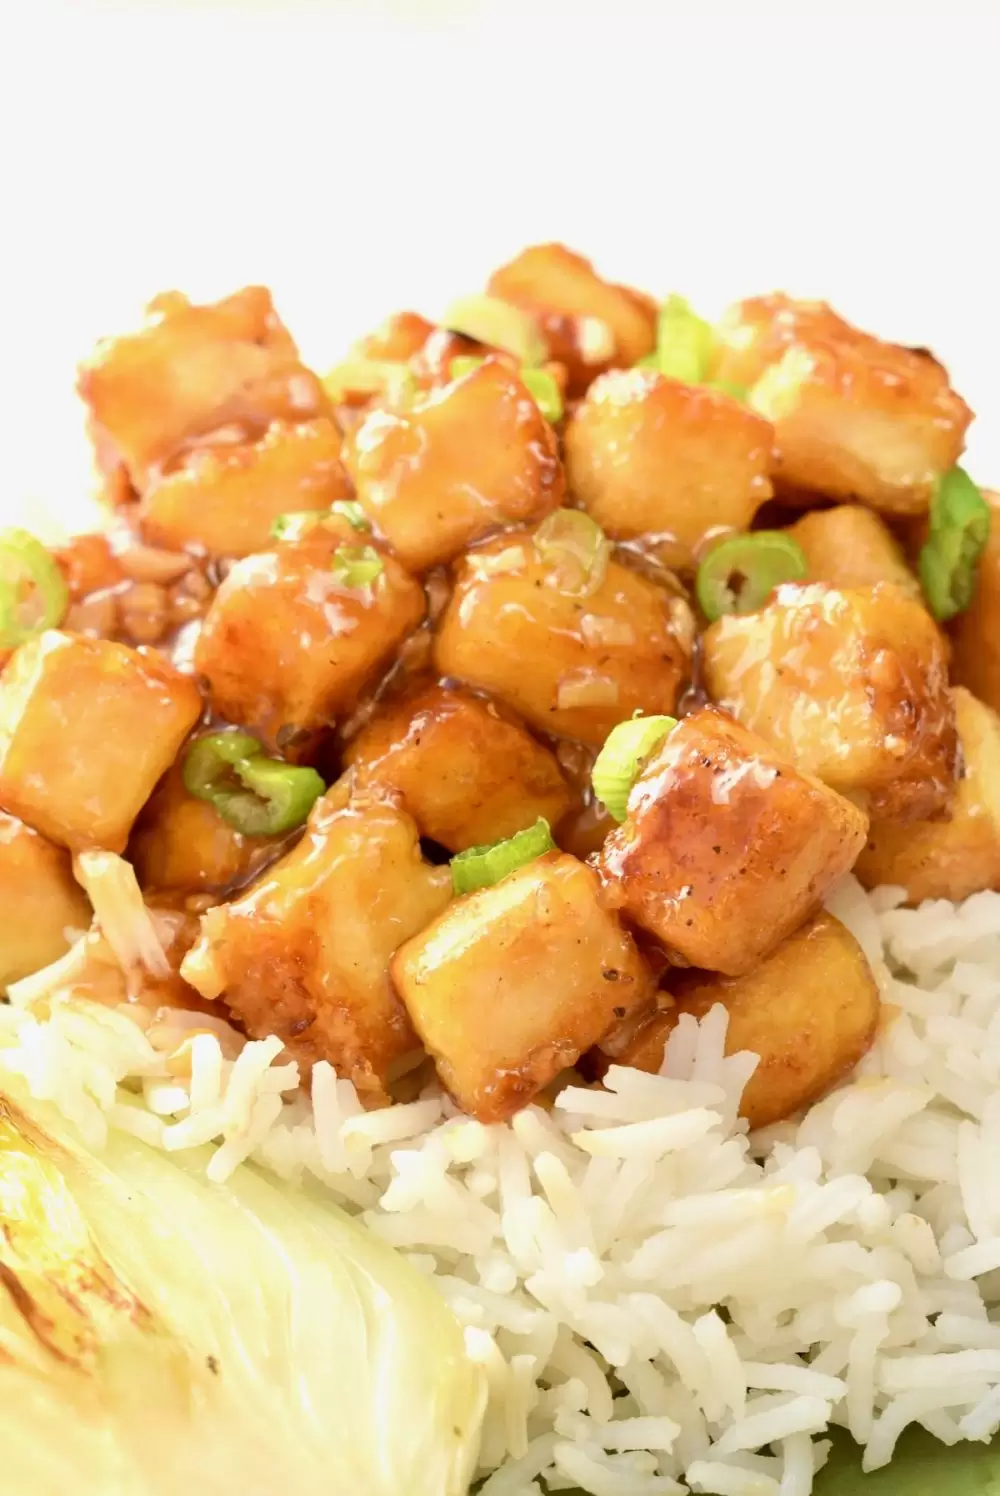 A sticky, shiny lemony sauce covering cubes of tofu on top of white rice.